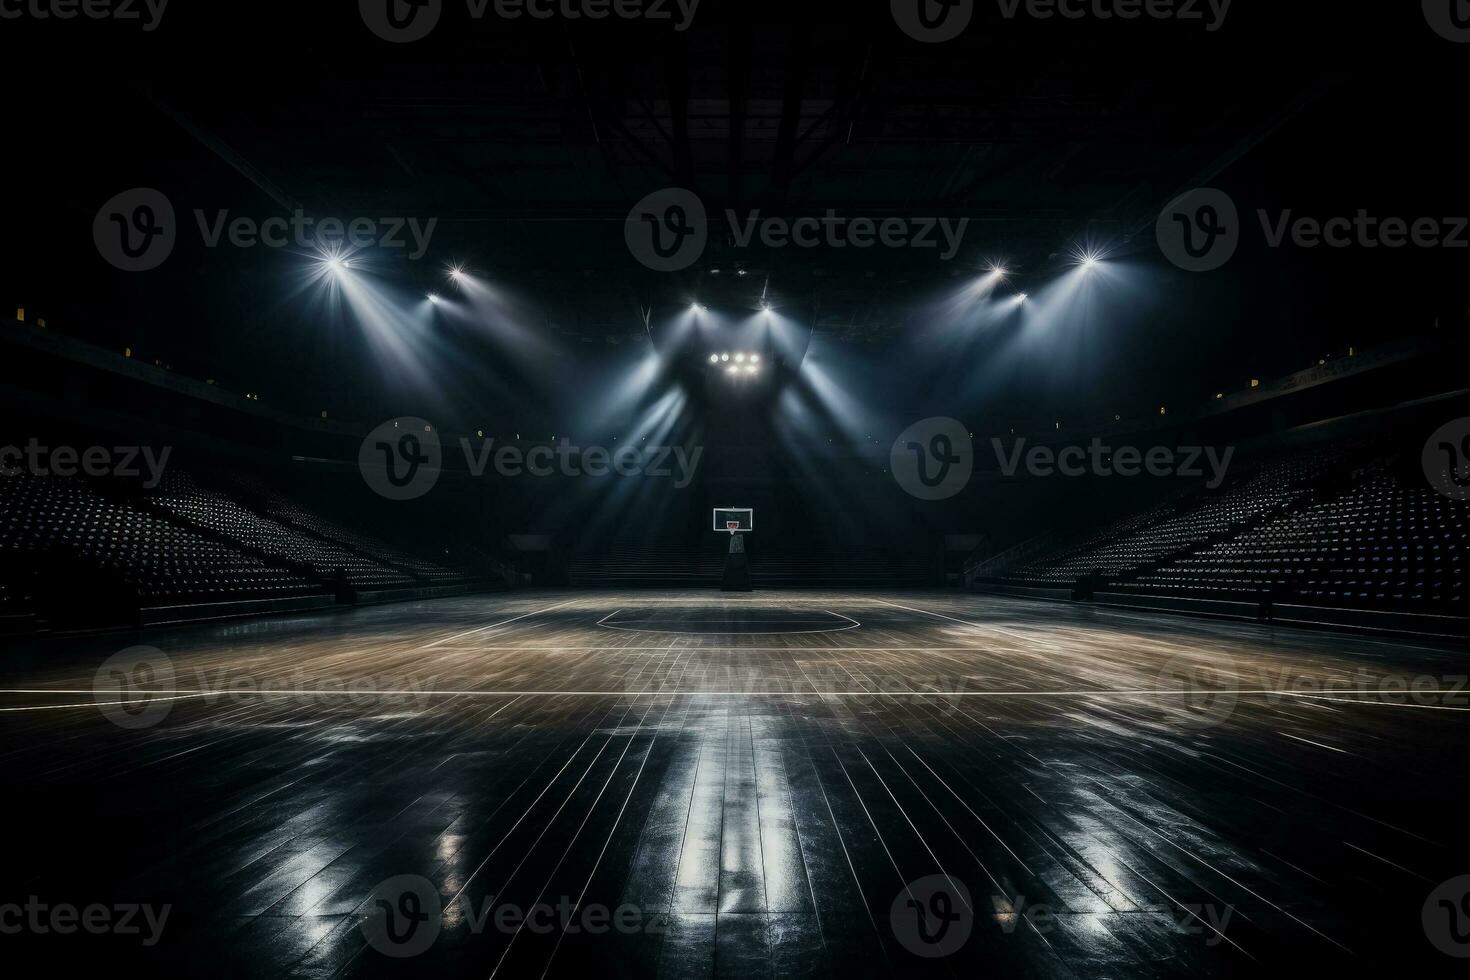 Grand basketball arena showcased in the spotlight enveloped in darkness photo